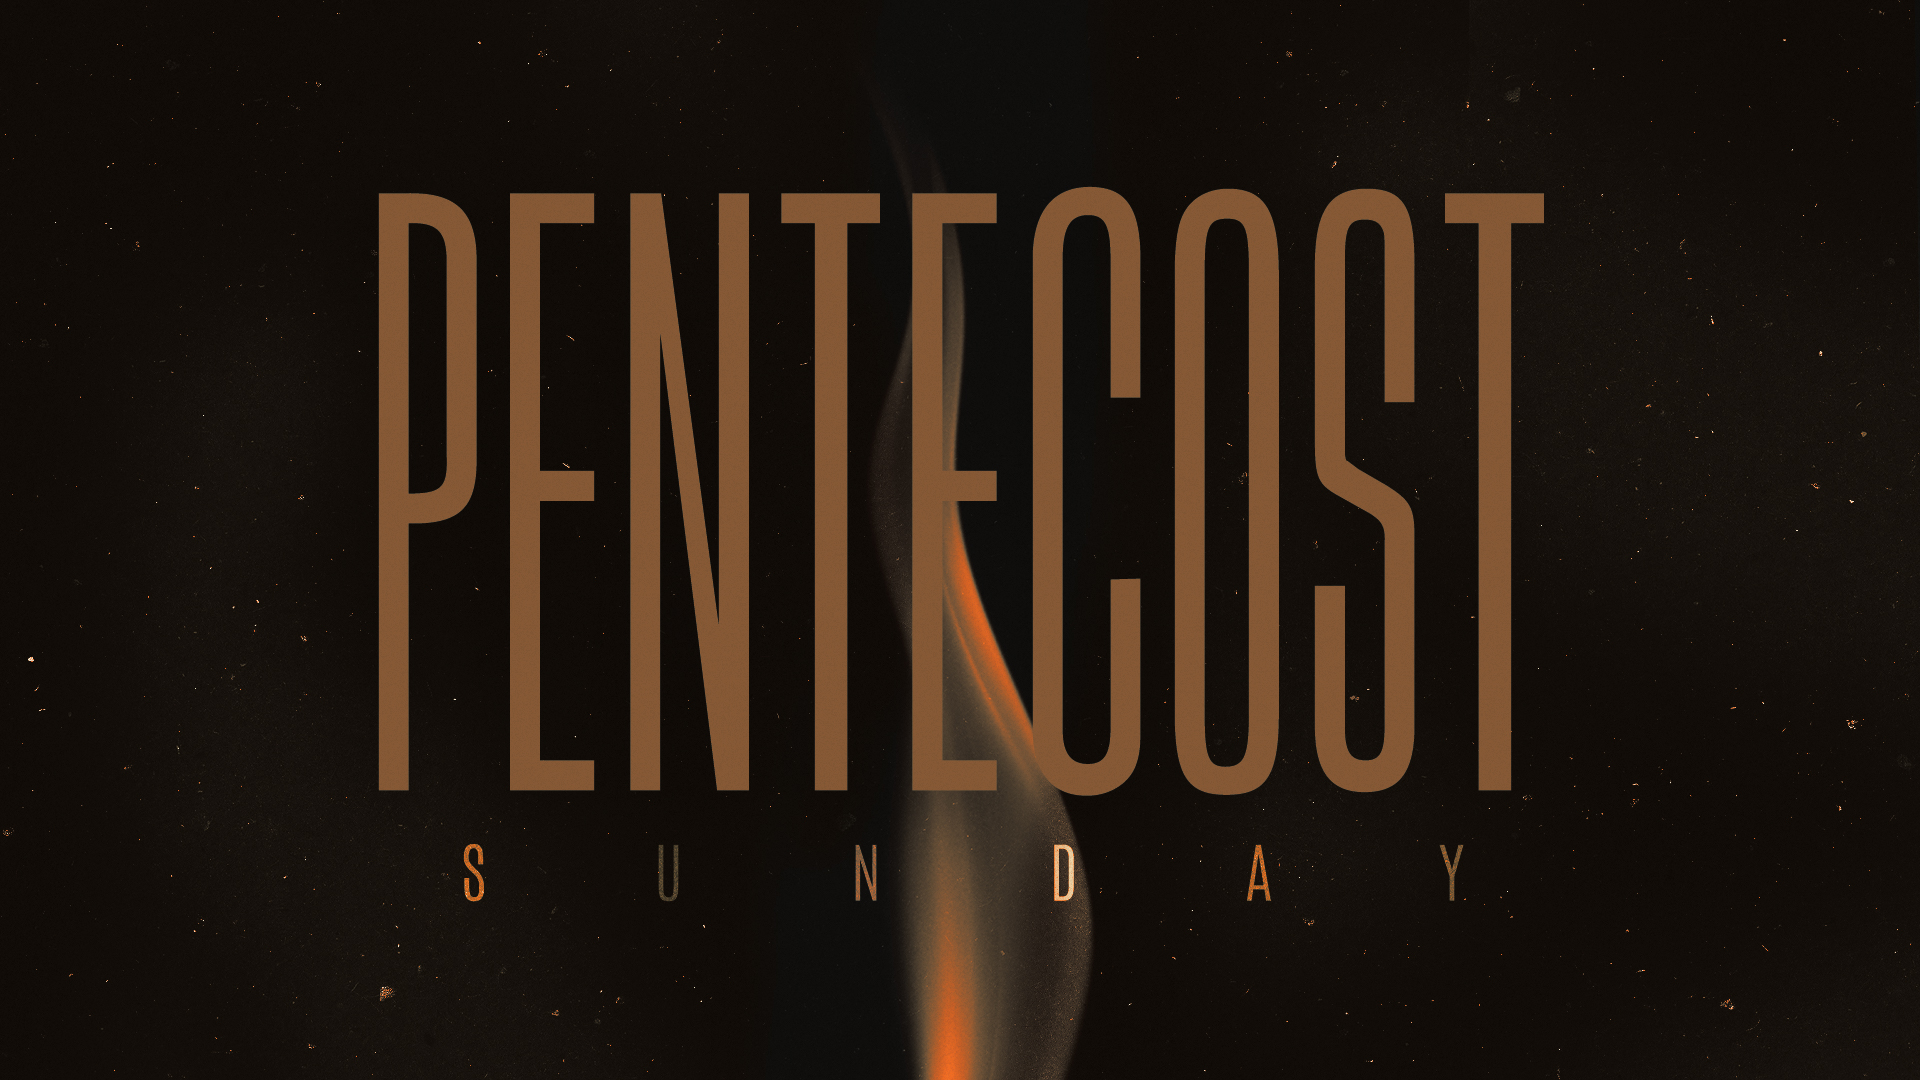 Paul and Pentecost